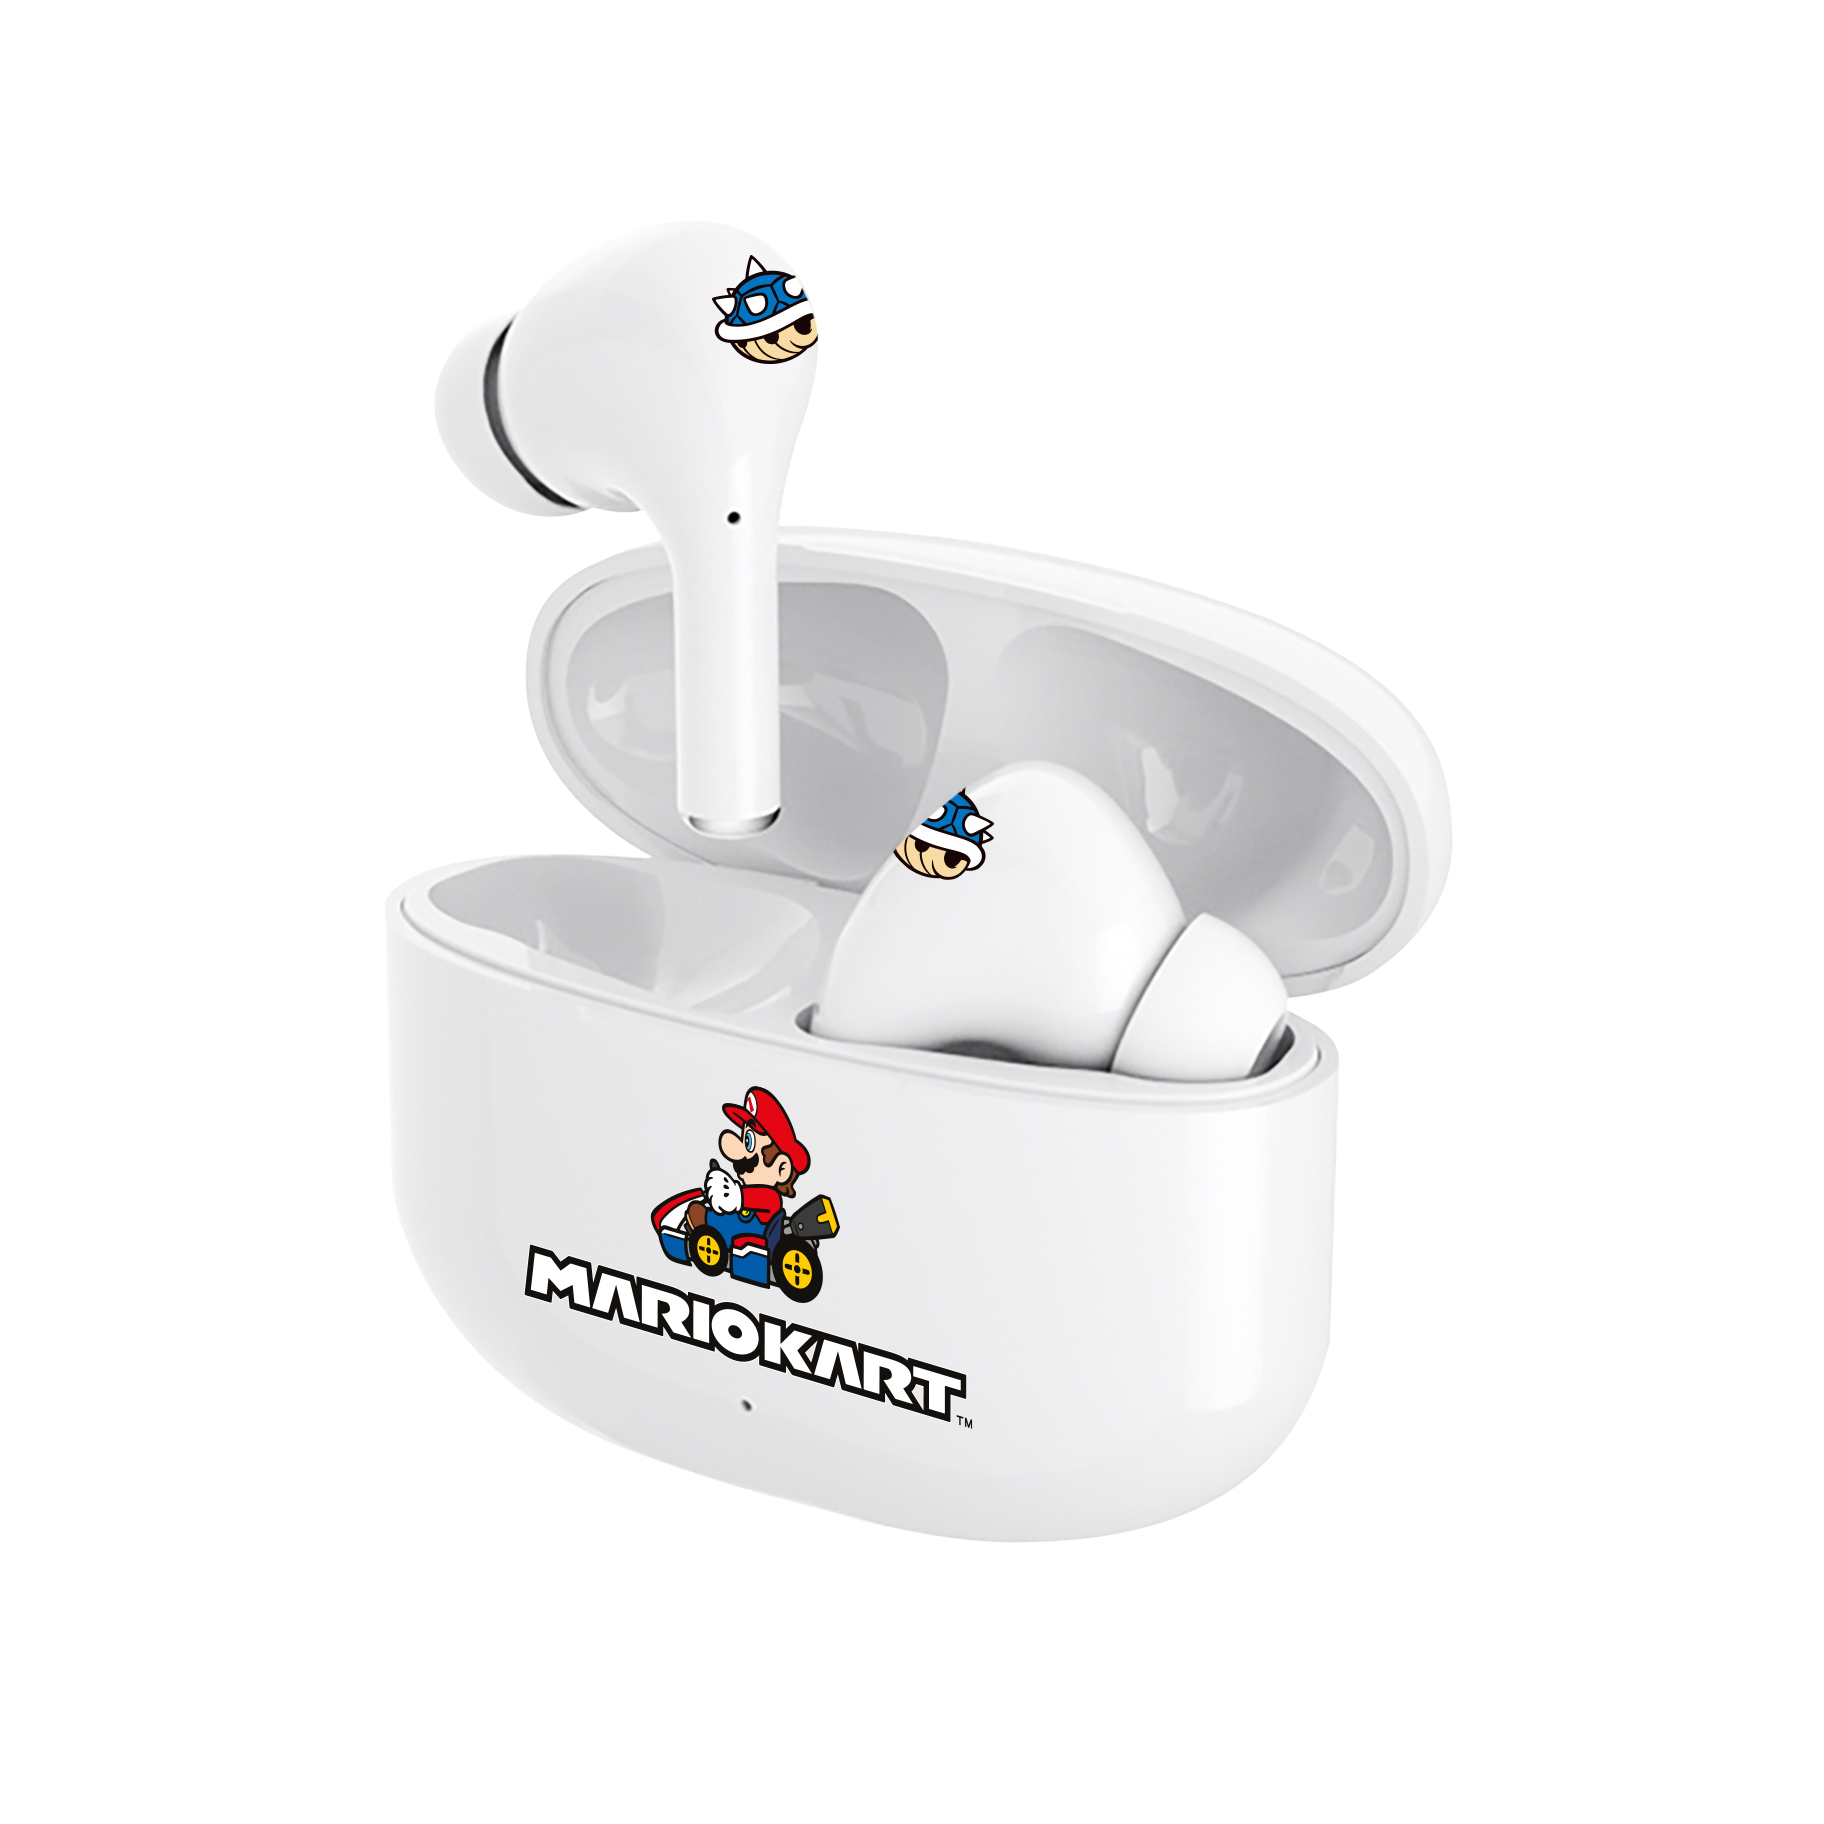 OTL TECHNOLOGIES Mariokart, In-ear weiß Bluetooth Kopfhörer